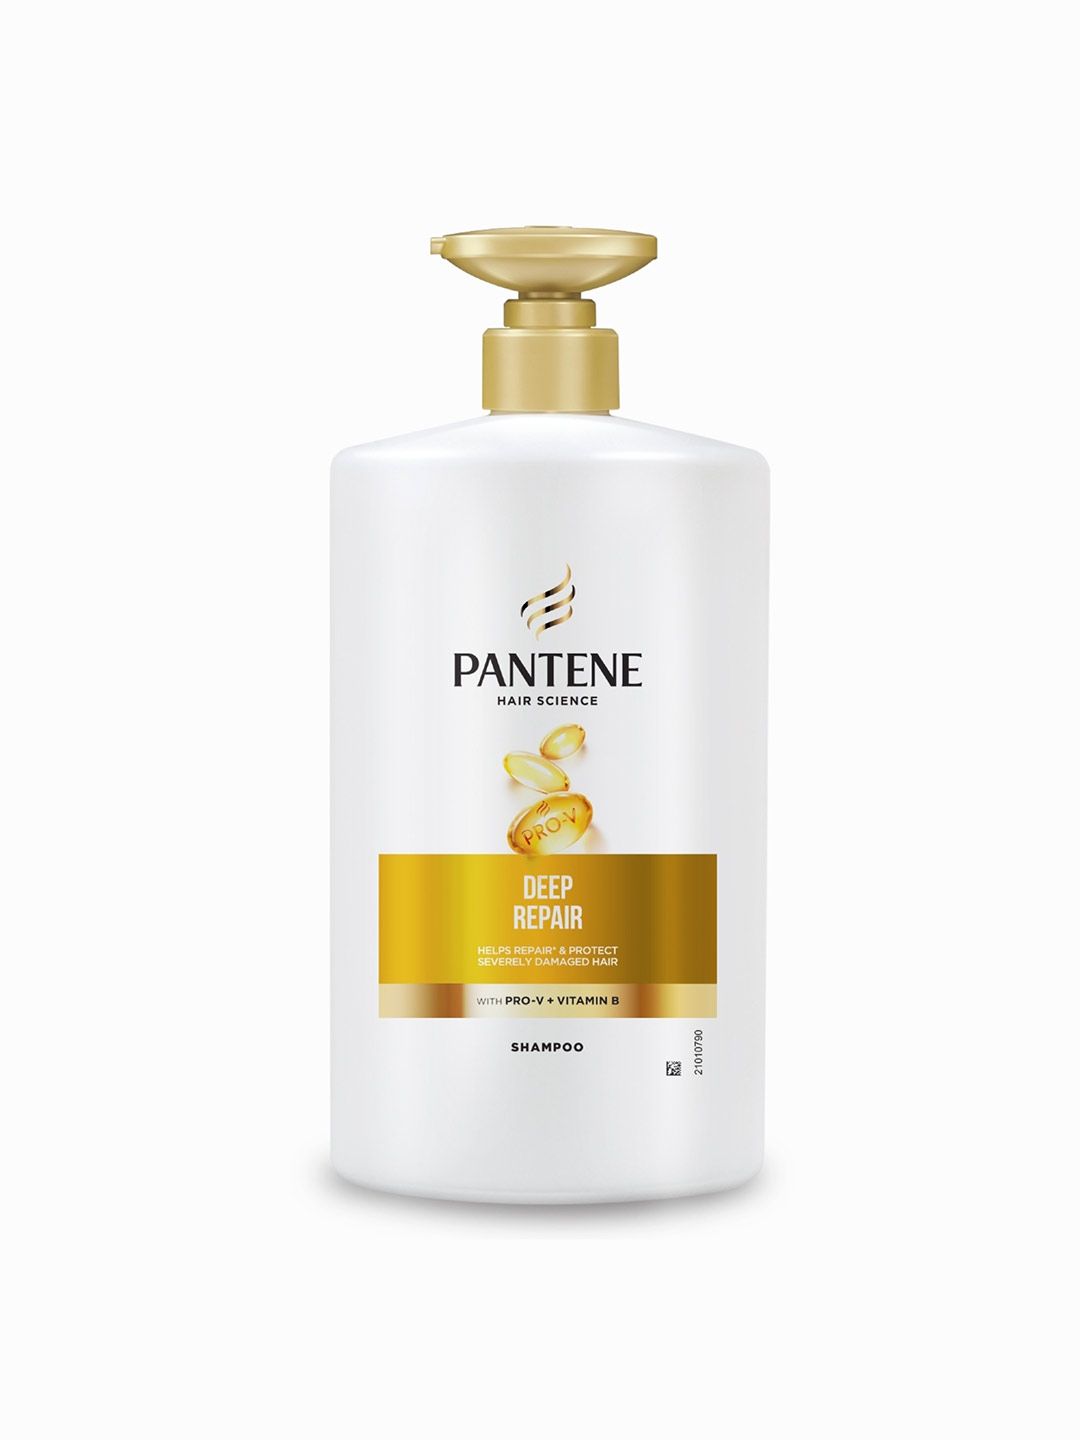 Pantene Hair Science Deep Repair Shampoo with Pro-V & Vitamin B for Damage Repair - 1L